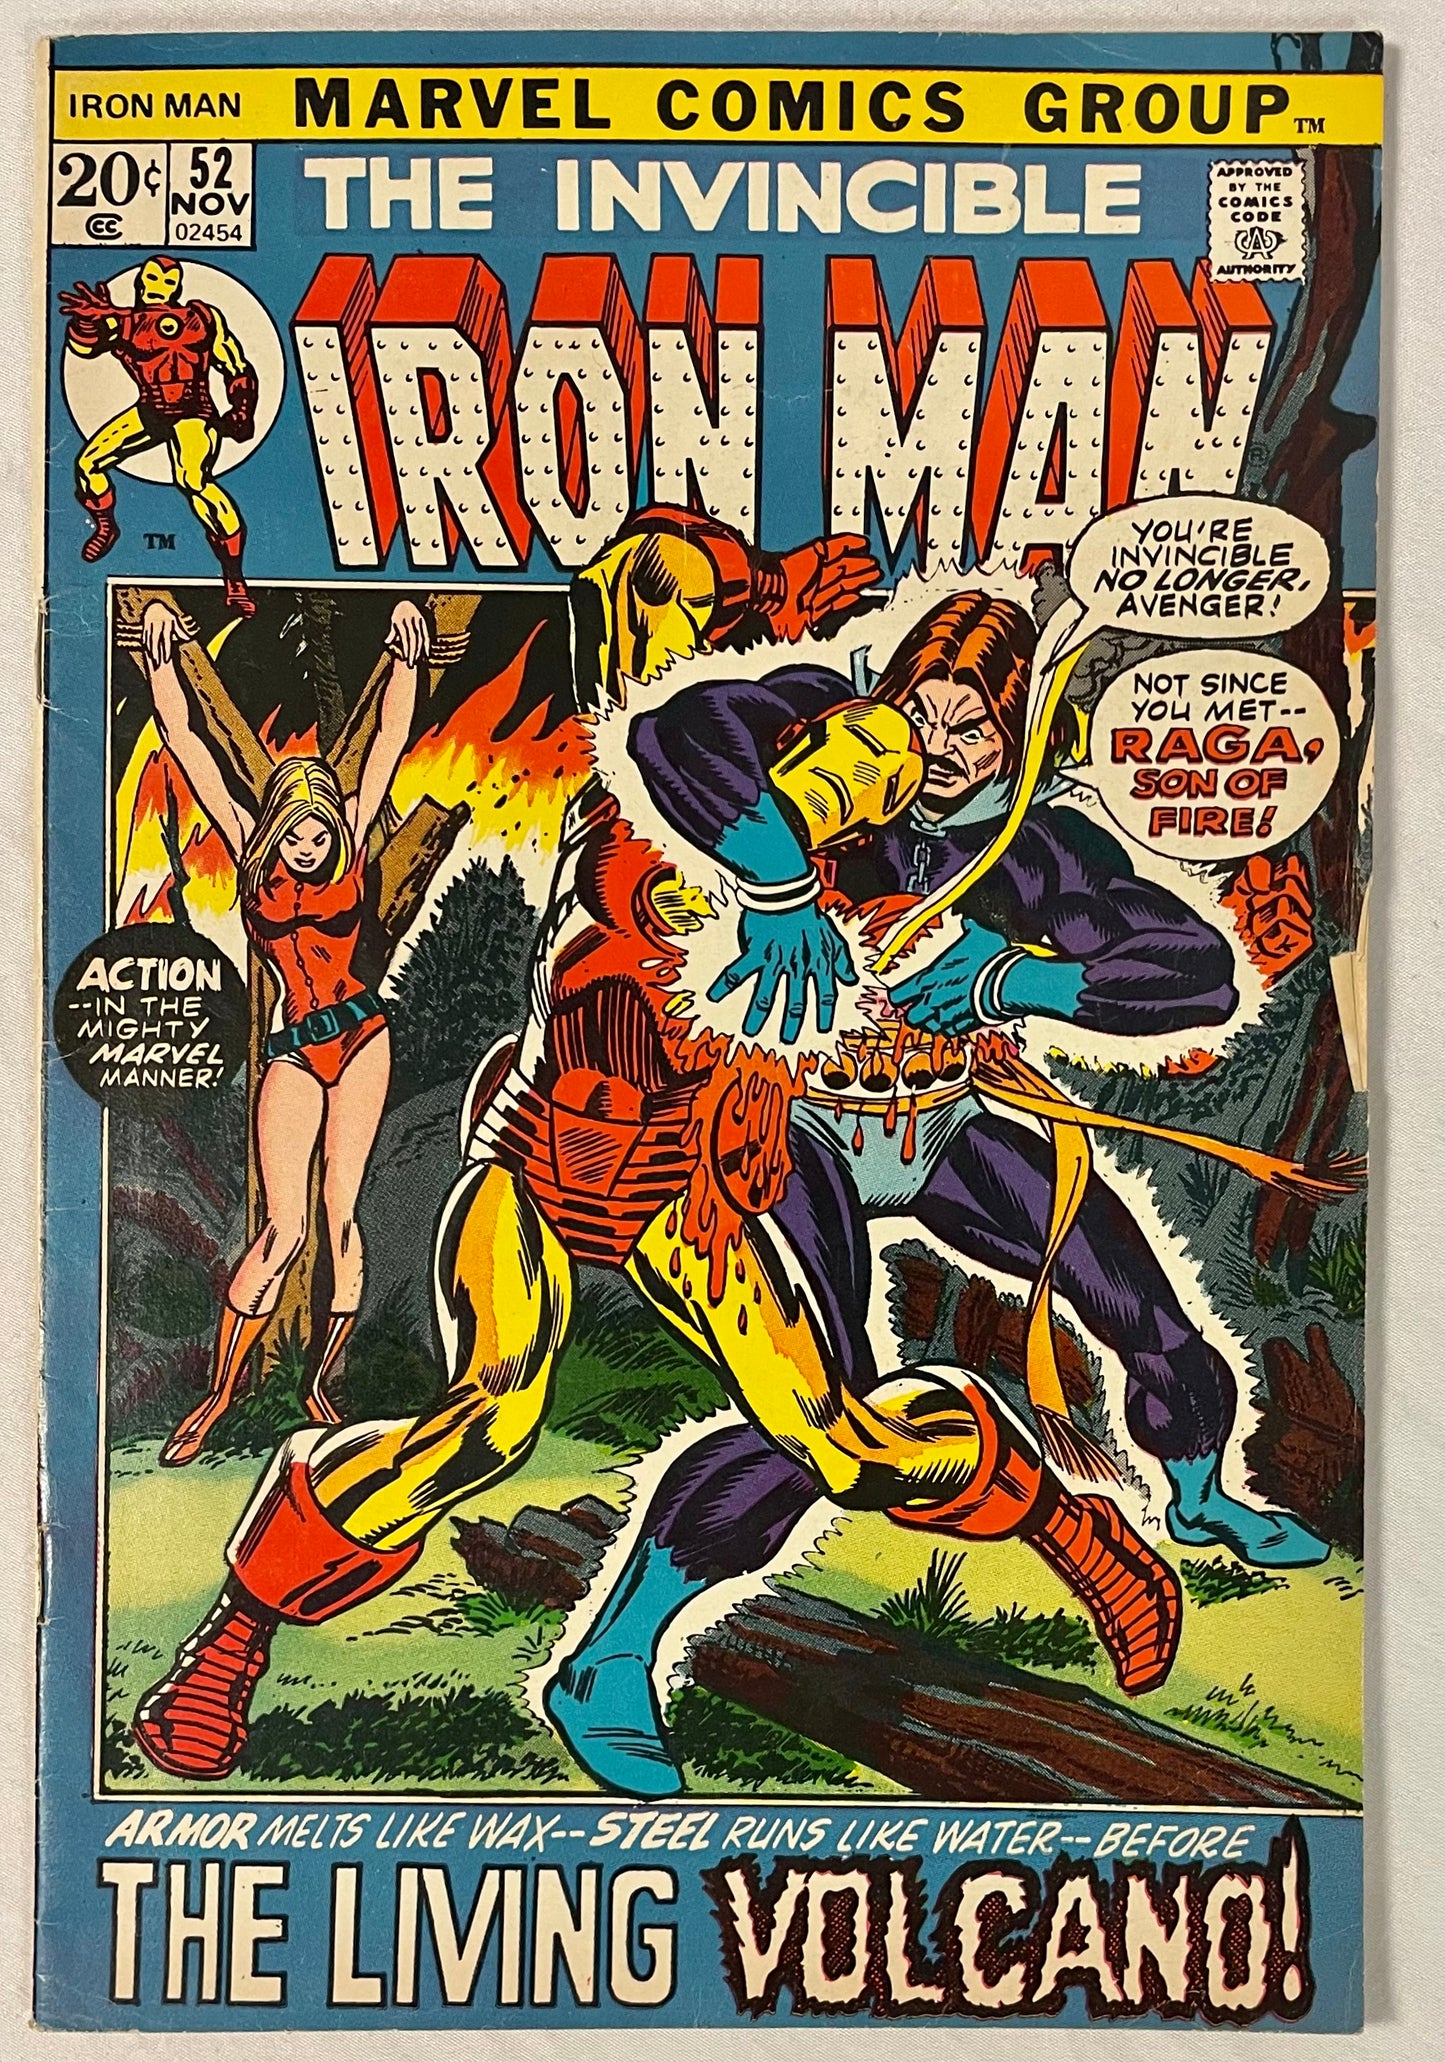 Marvel Comics The Invincible Iron Man #52